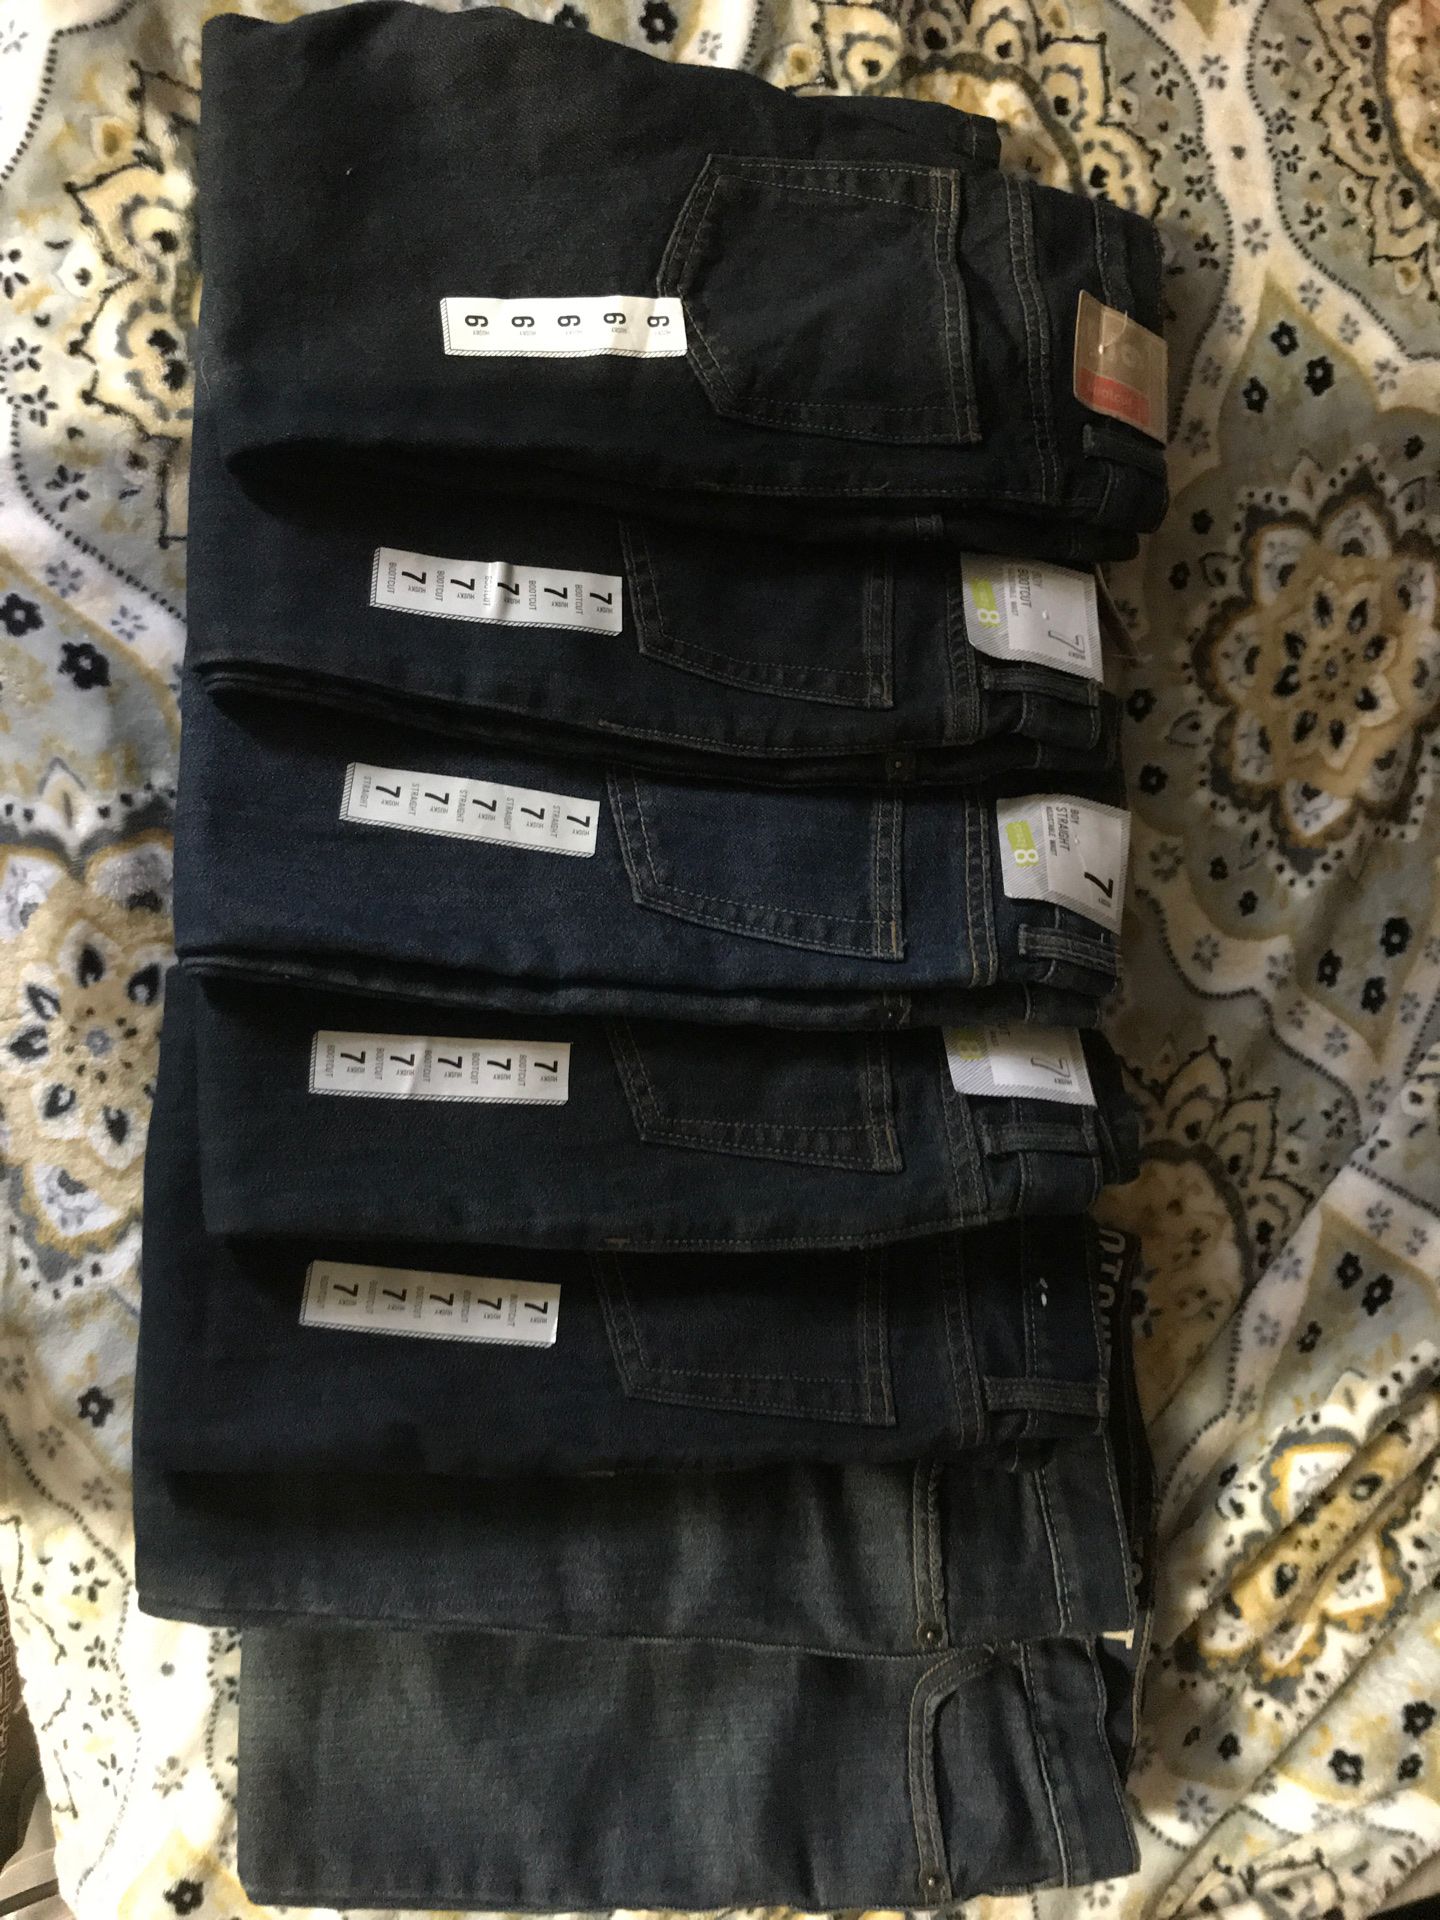 Boys Jeans size 7